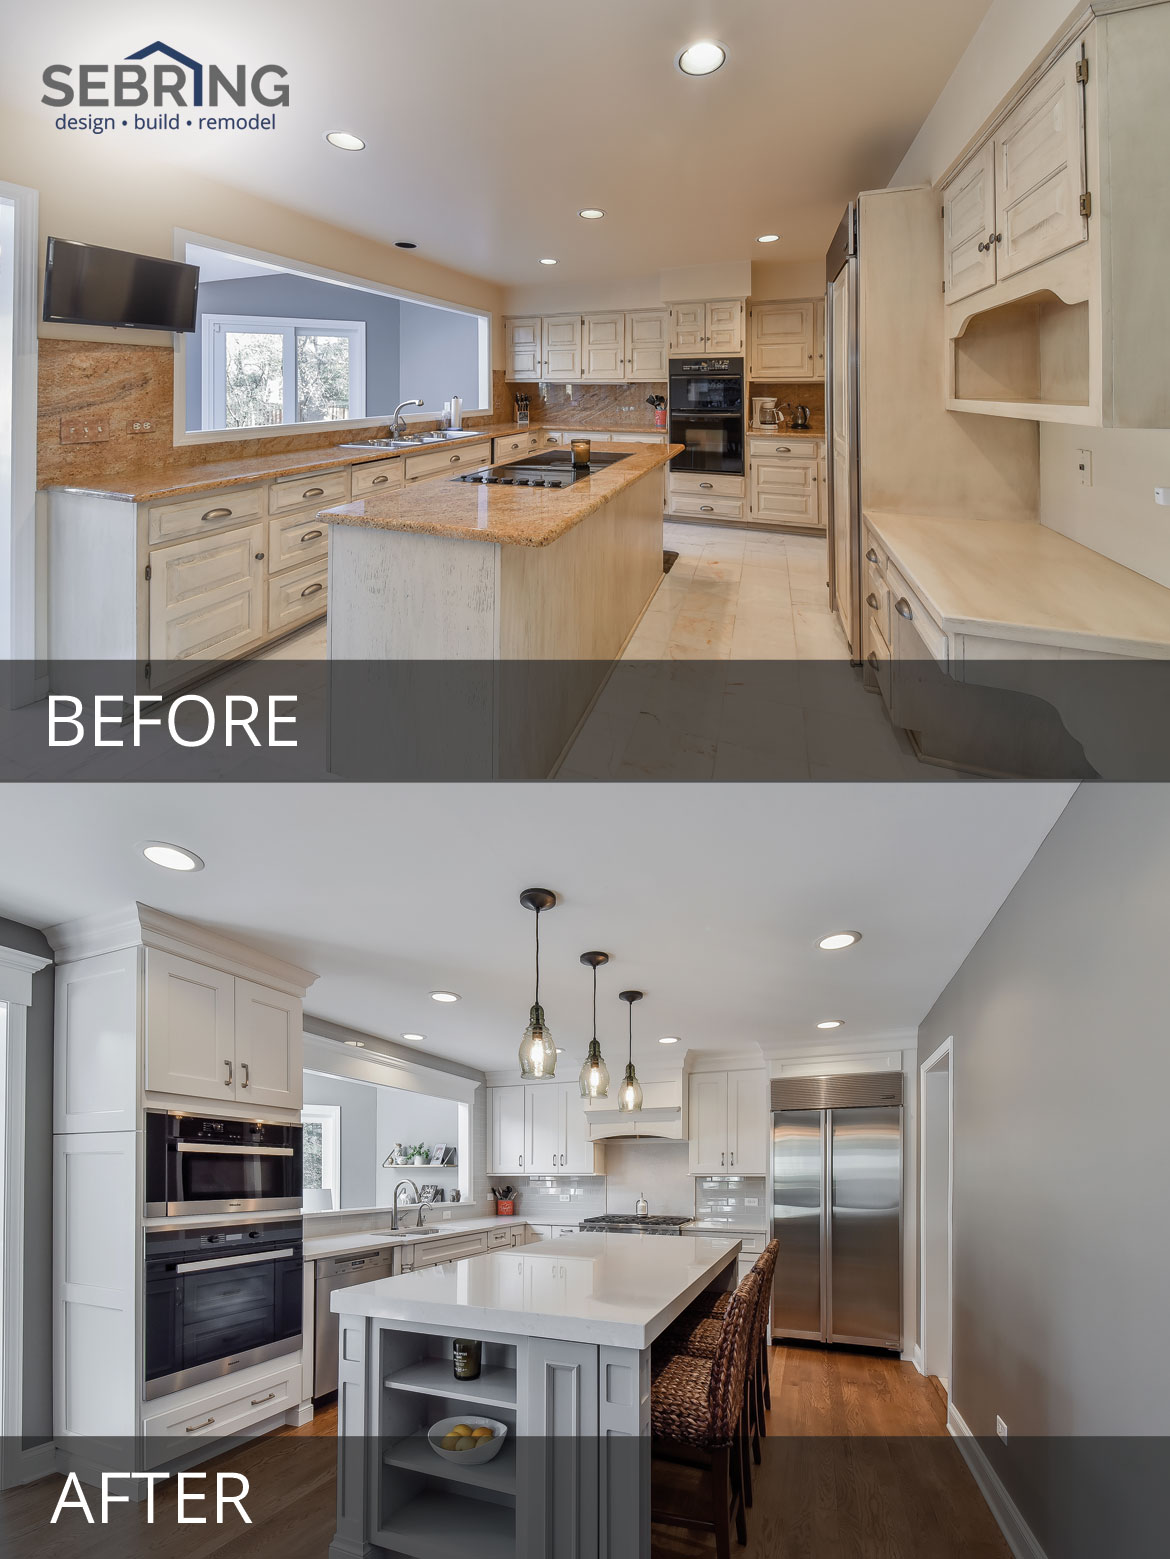 Naperville Kitchen Remodeling Before and After Pictures - Sebring Design Build